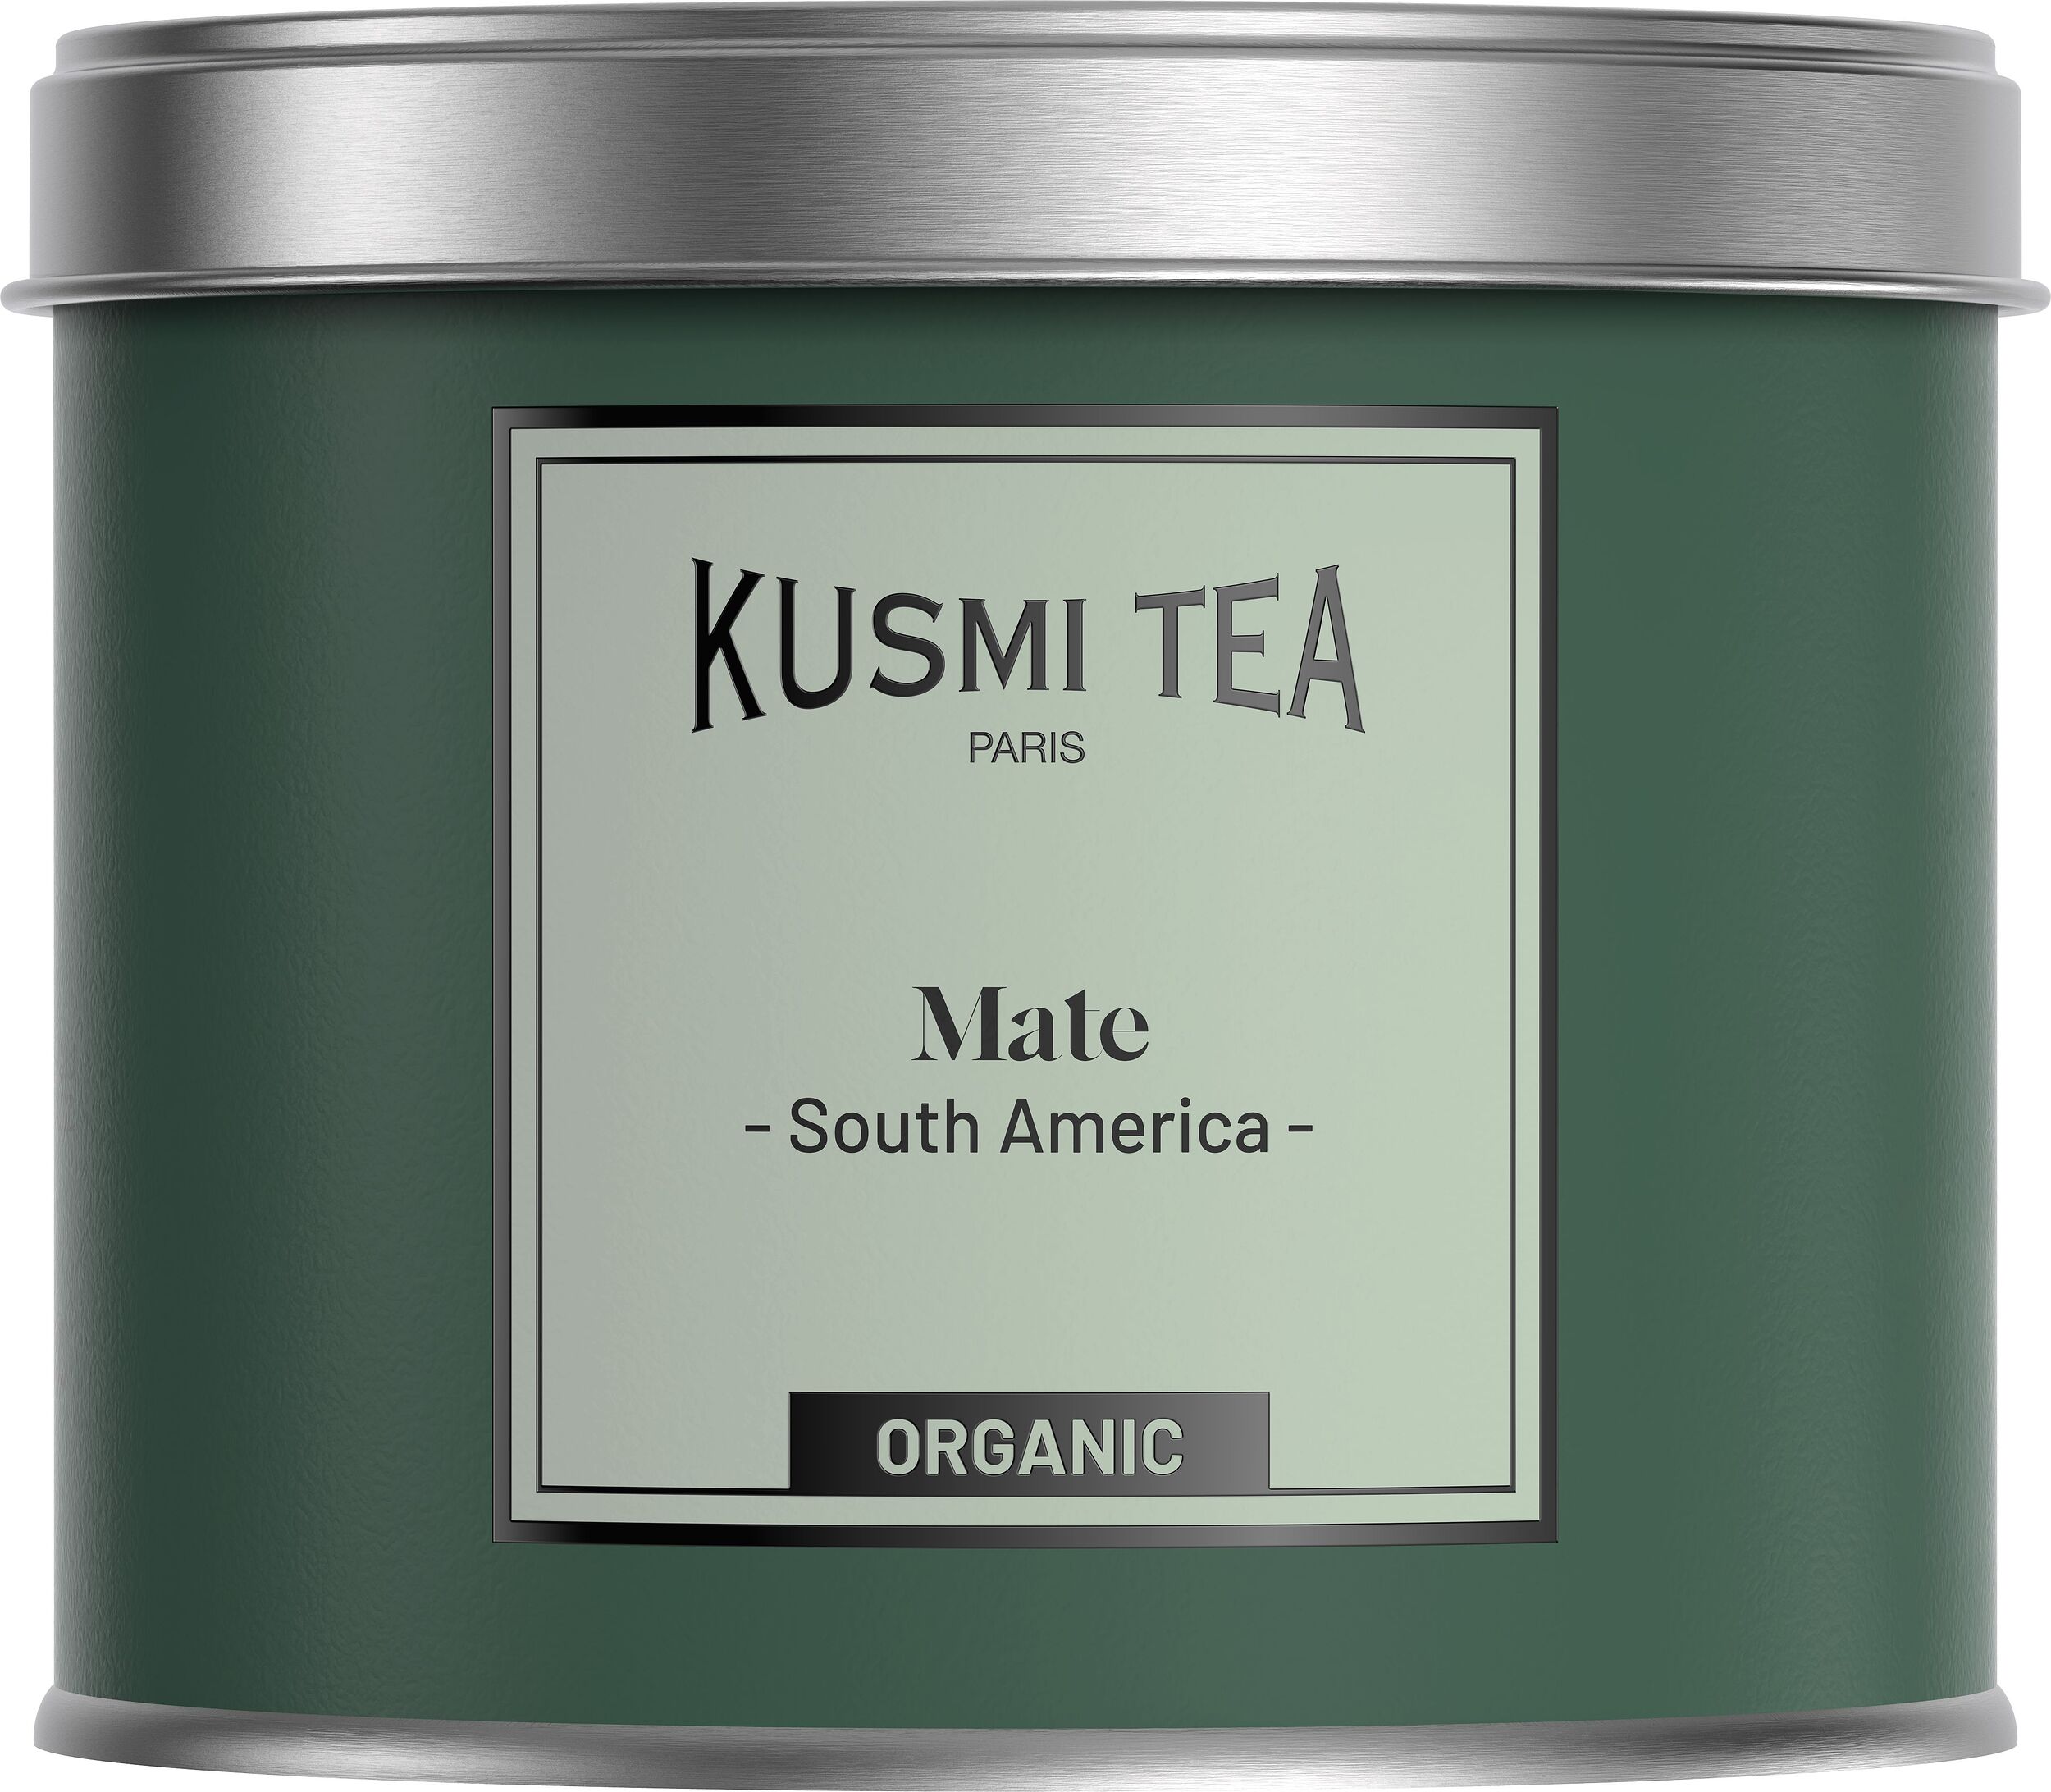 Kusmi Tea, Official Profile